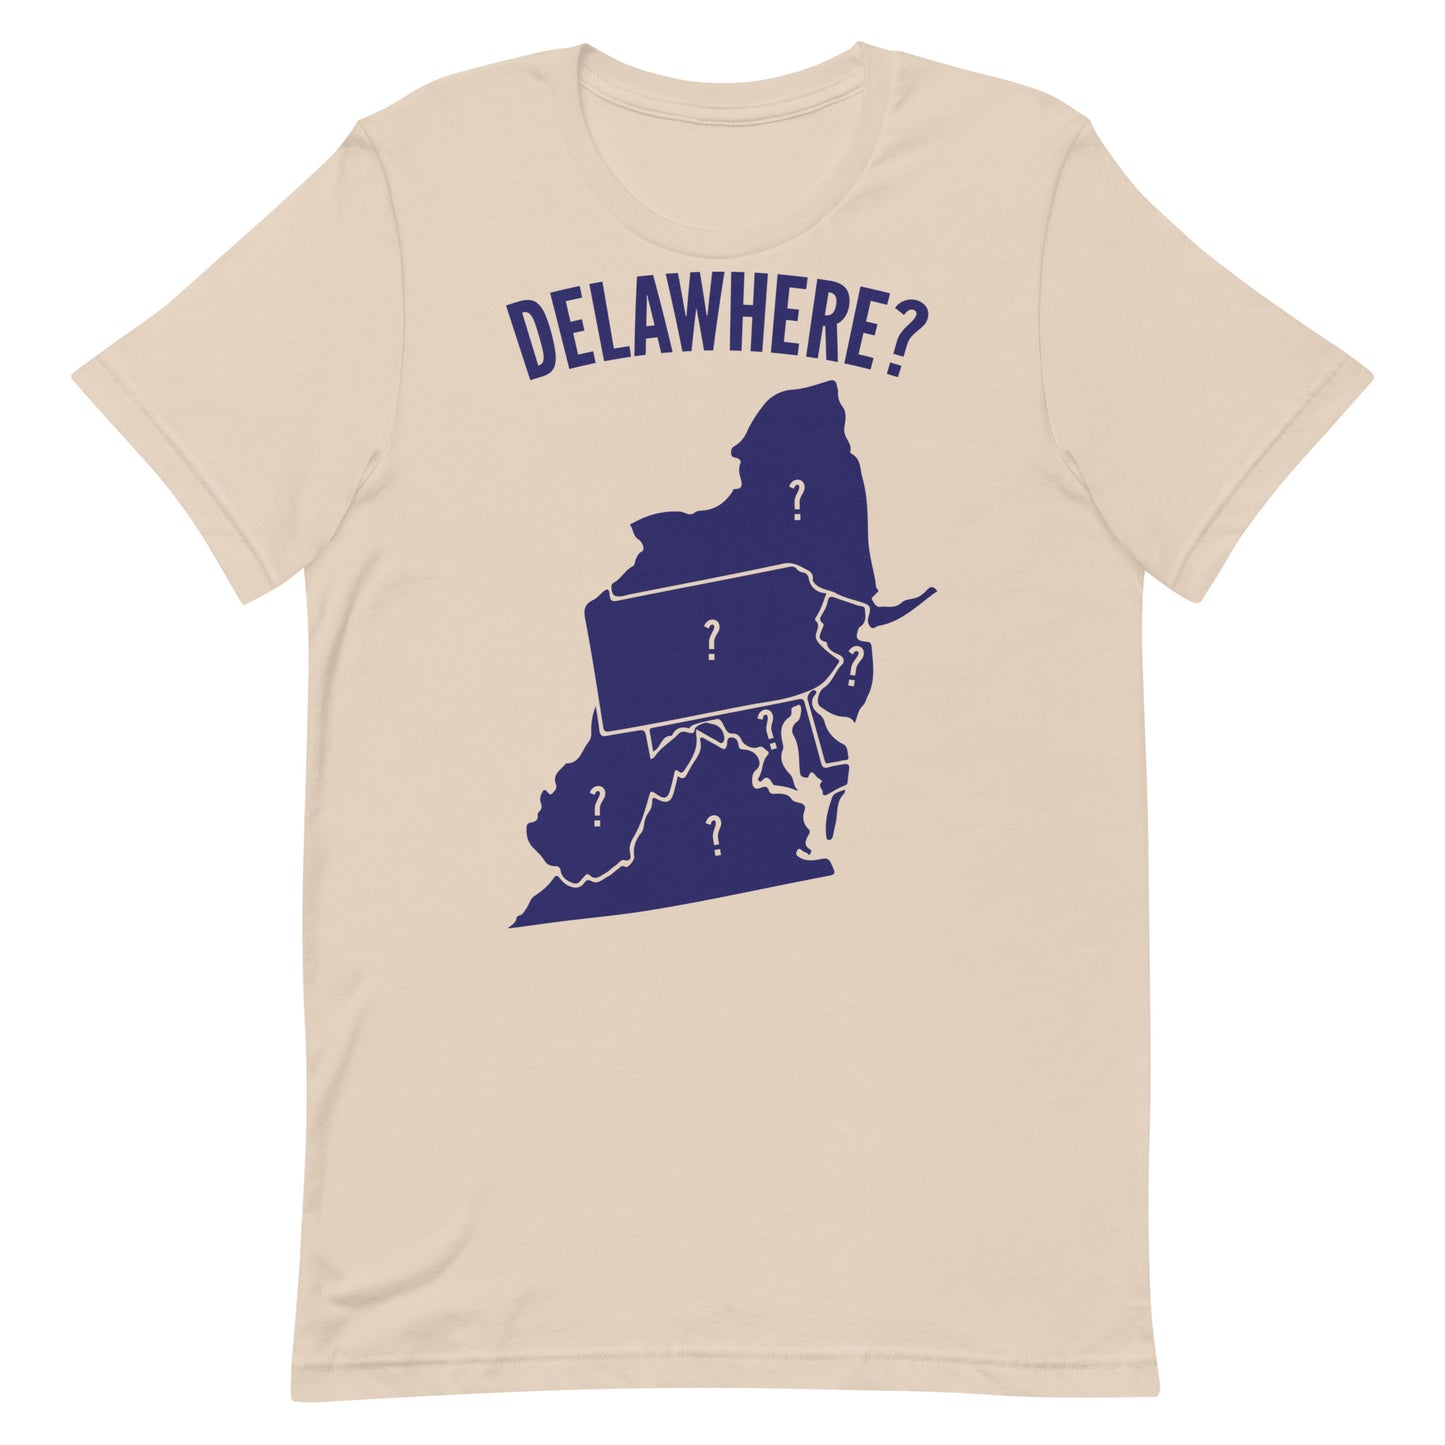 Delawhere? Unisex t-shirt